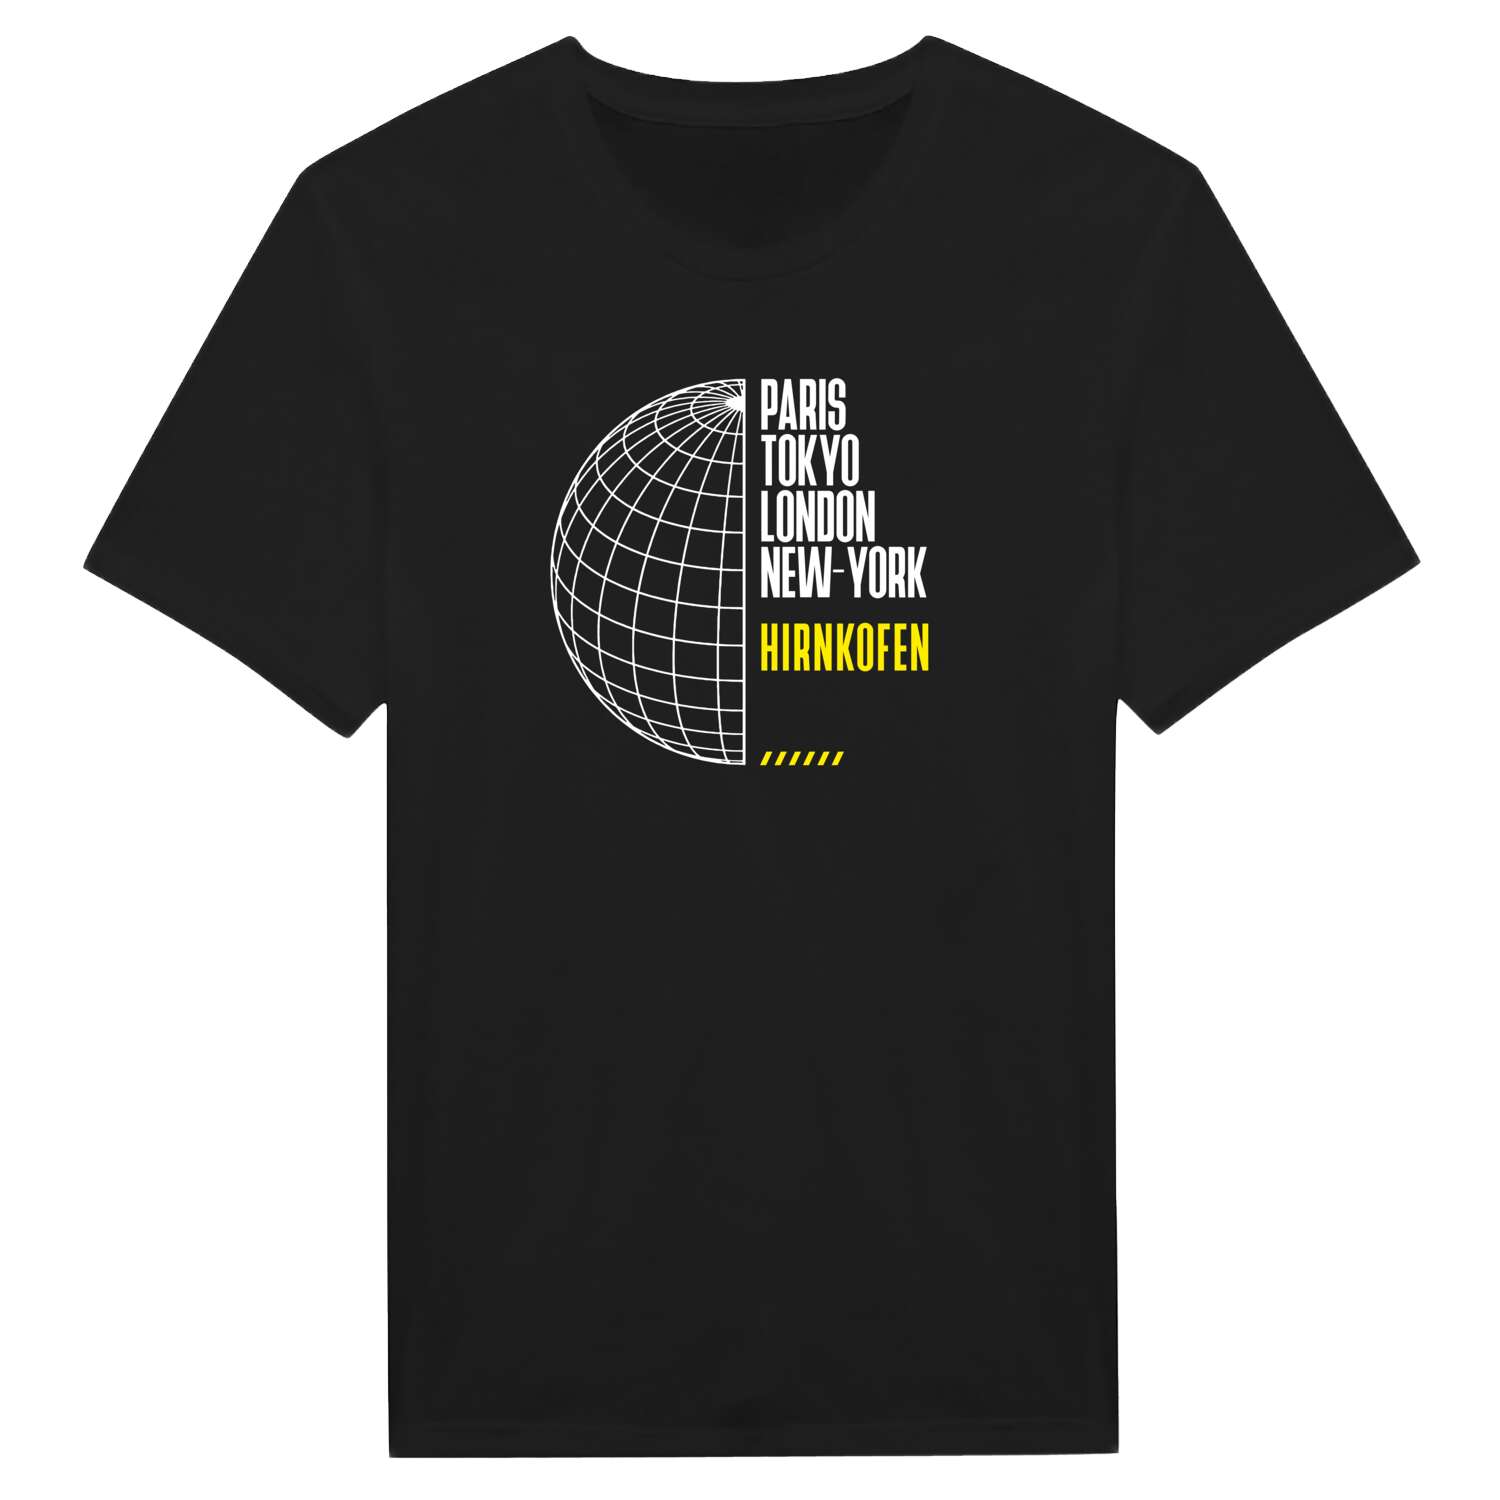 Hirnkofen T-Shirt »Paris Tokyo London«